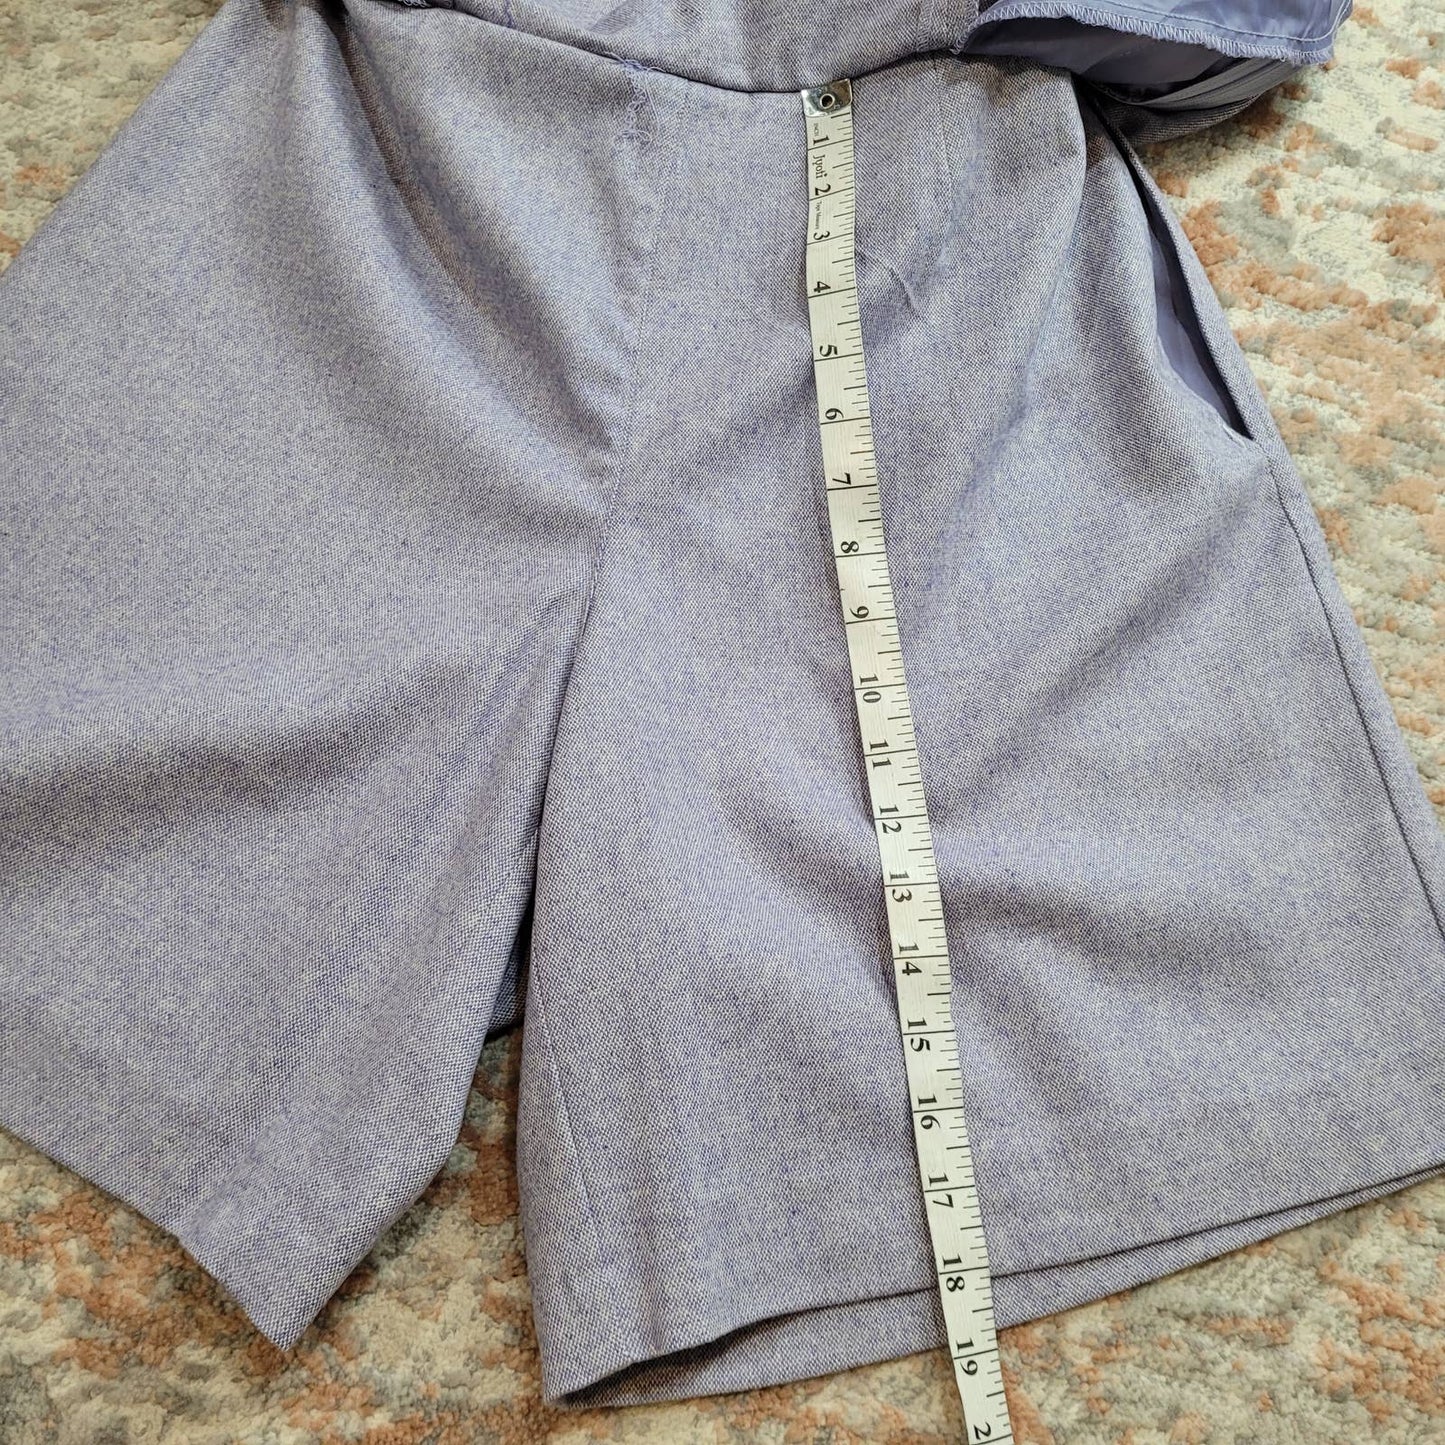 Liz Claiborne Golf Lavender Wool Blend Skort - Size 12